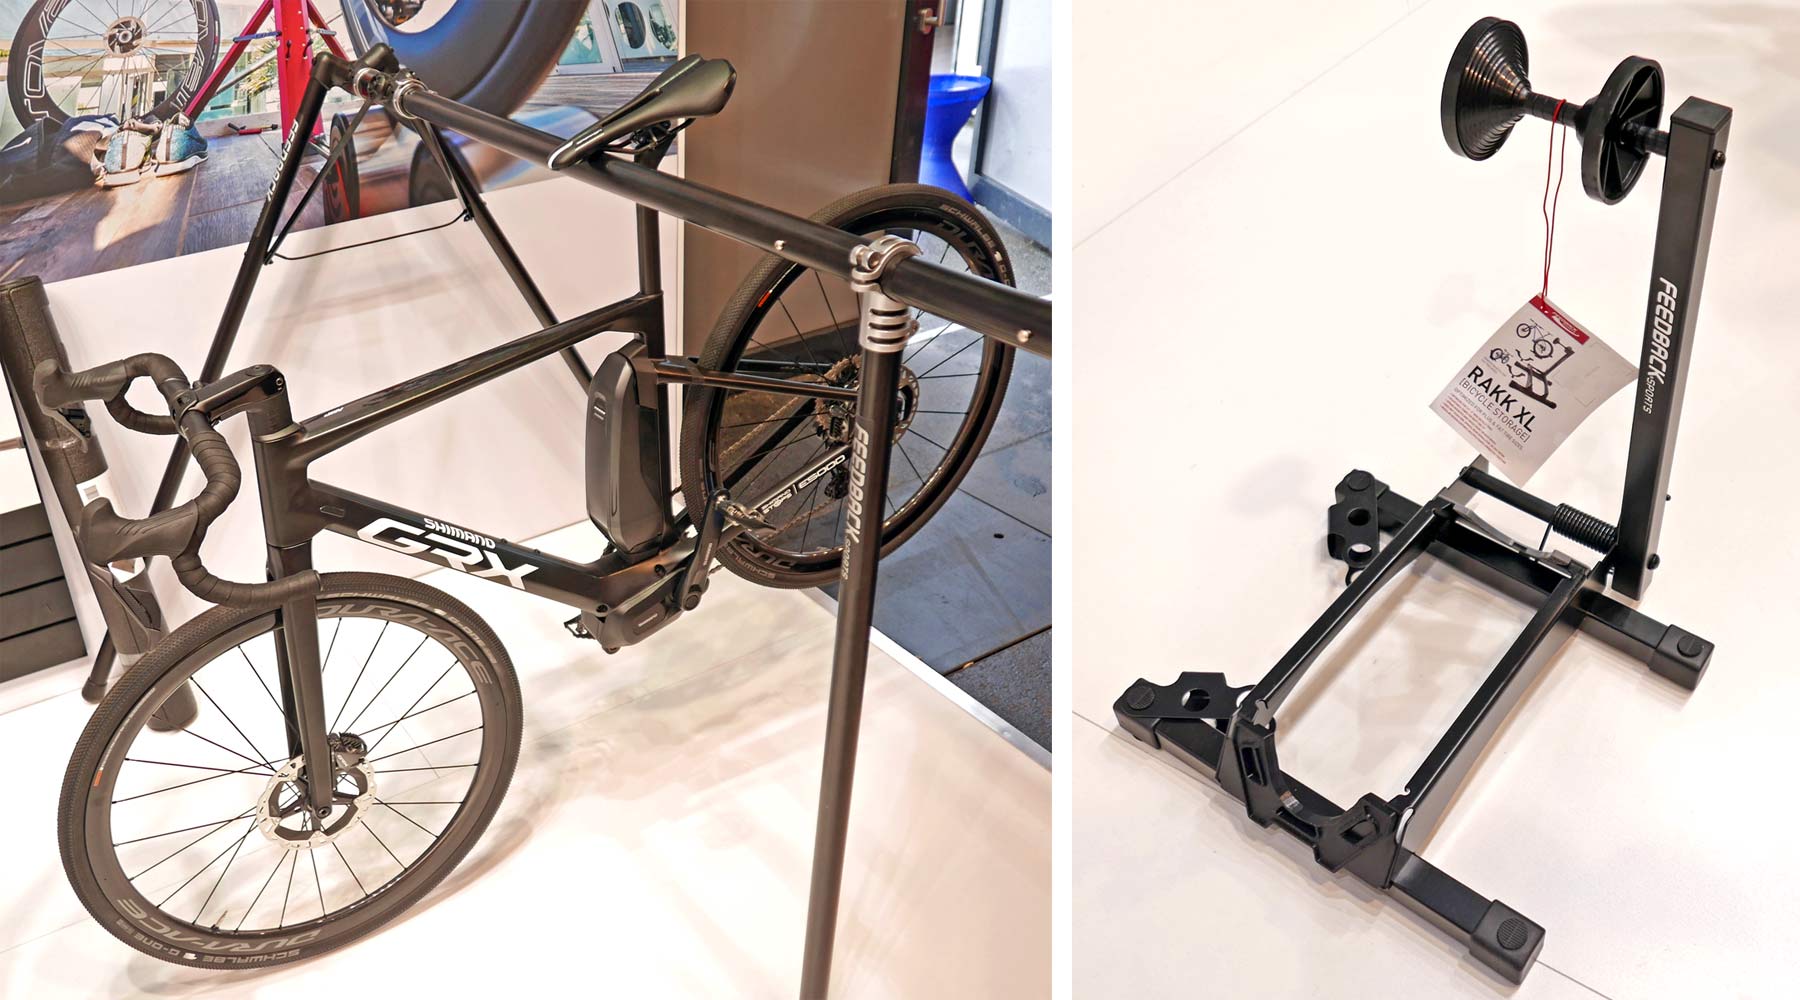 2020 Feedback Sports tools A Frame Third Leg support and Rakk XL fat bike rack